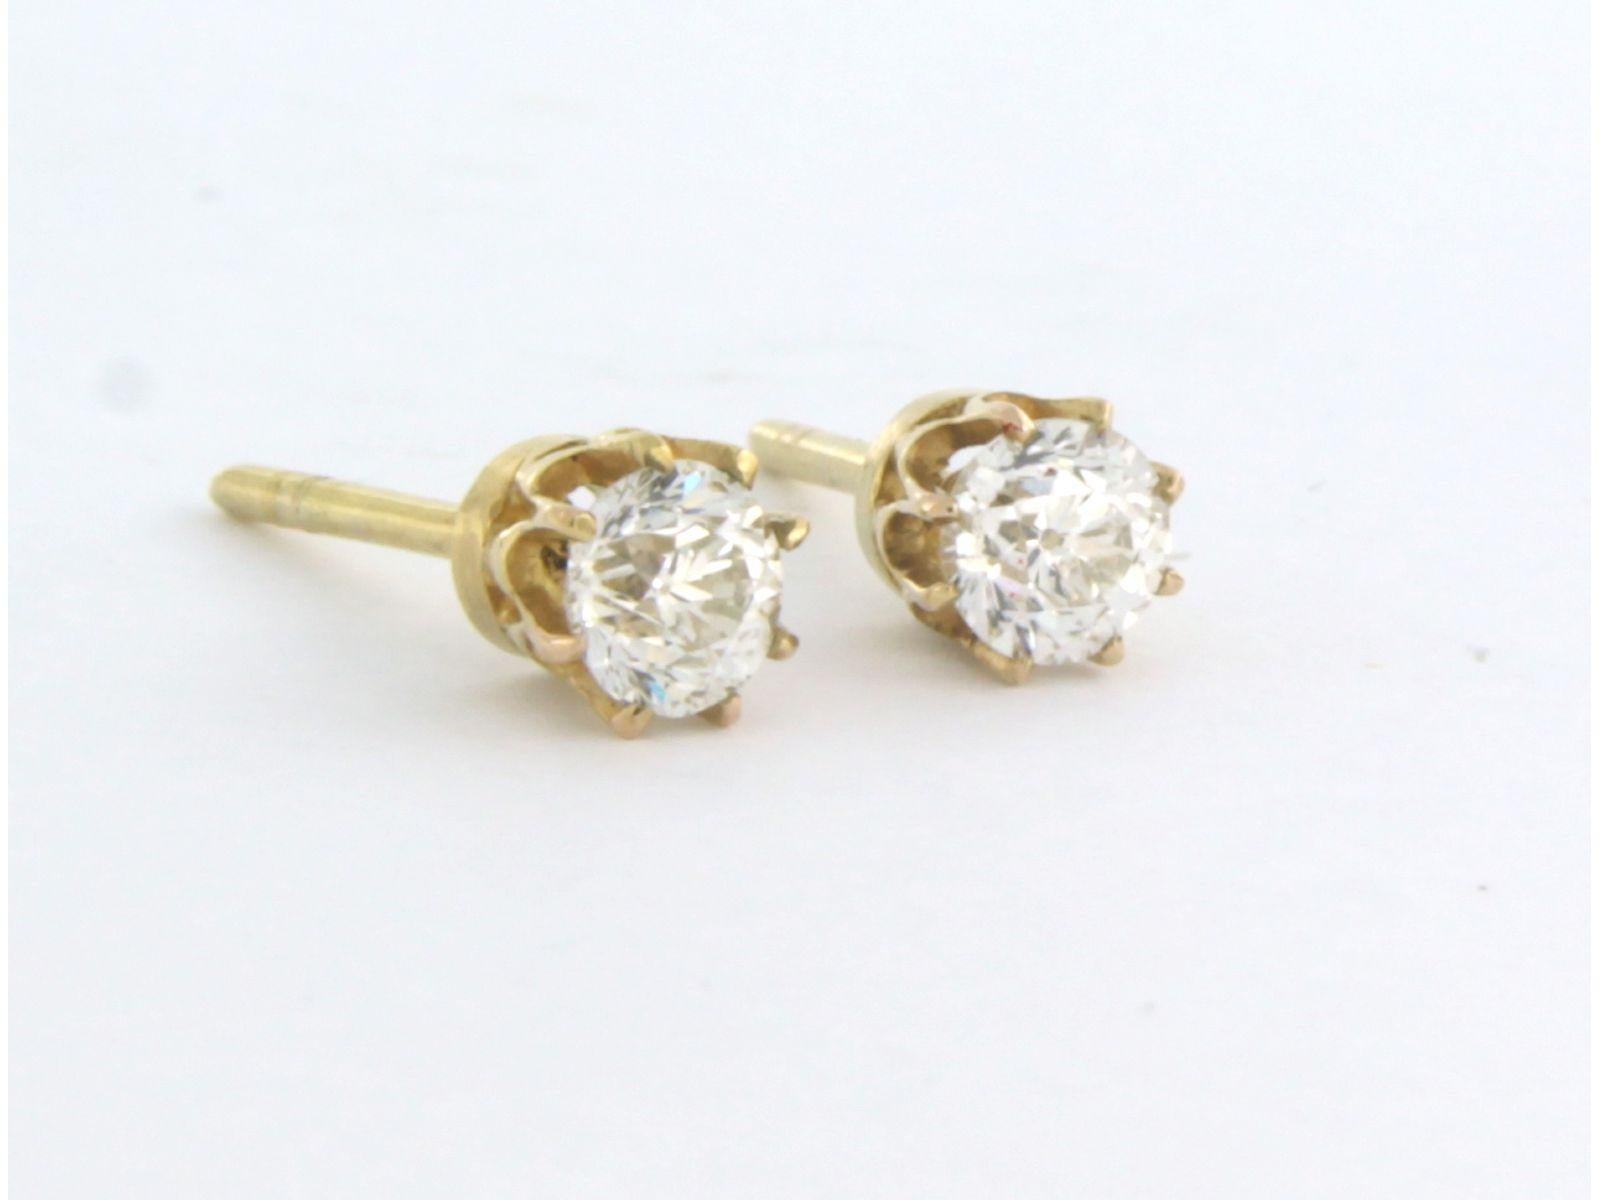 Old European Cut Earrings studs diamonds 14k yellow gold For Sale